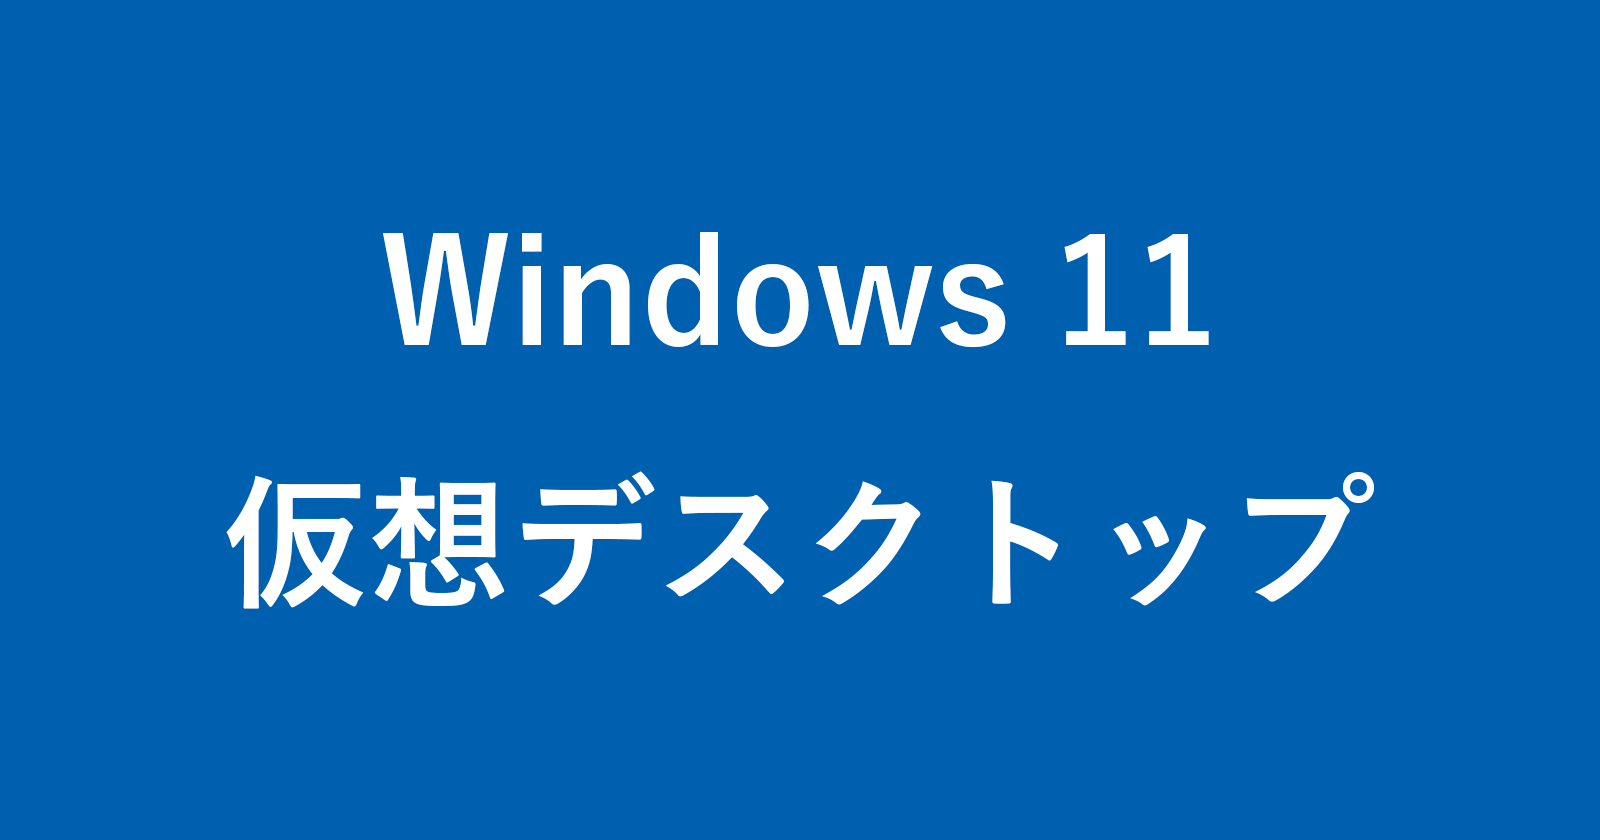 windows 11 virtual desktop